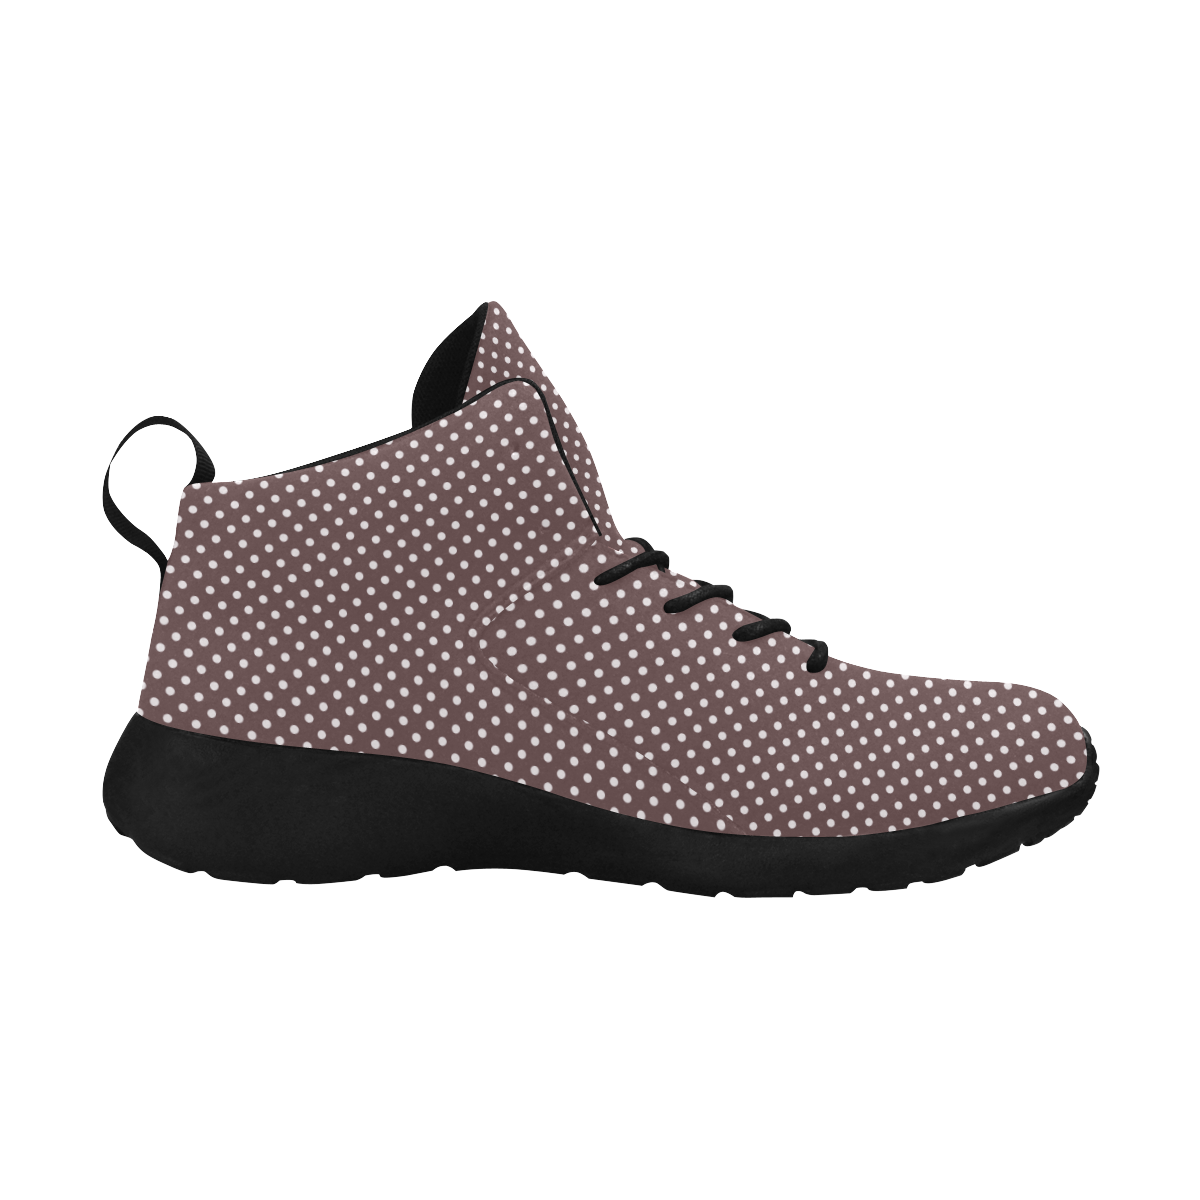 Chocolate brown polka dots Women's Chukka Training Shoes/Large Size (Model 57502)